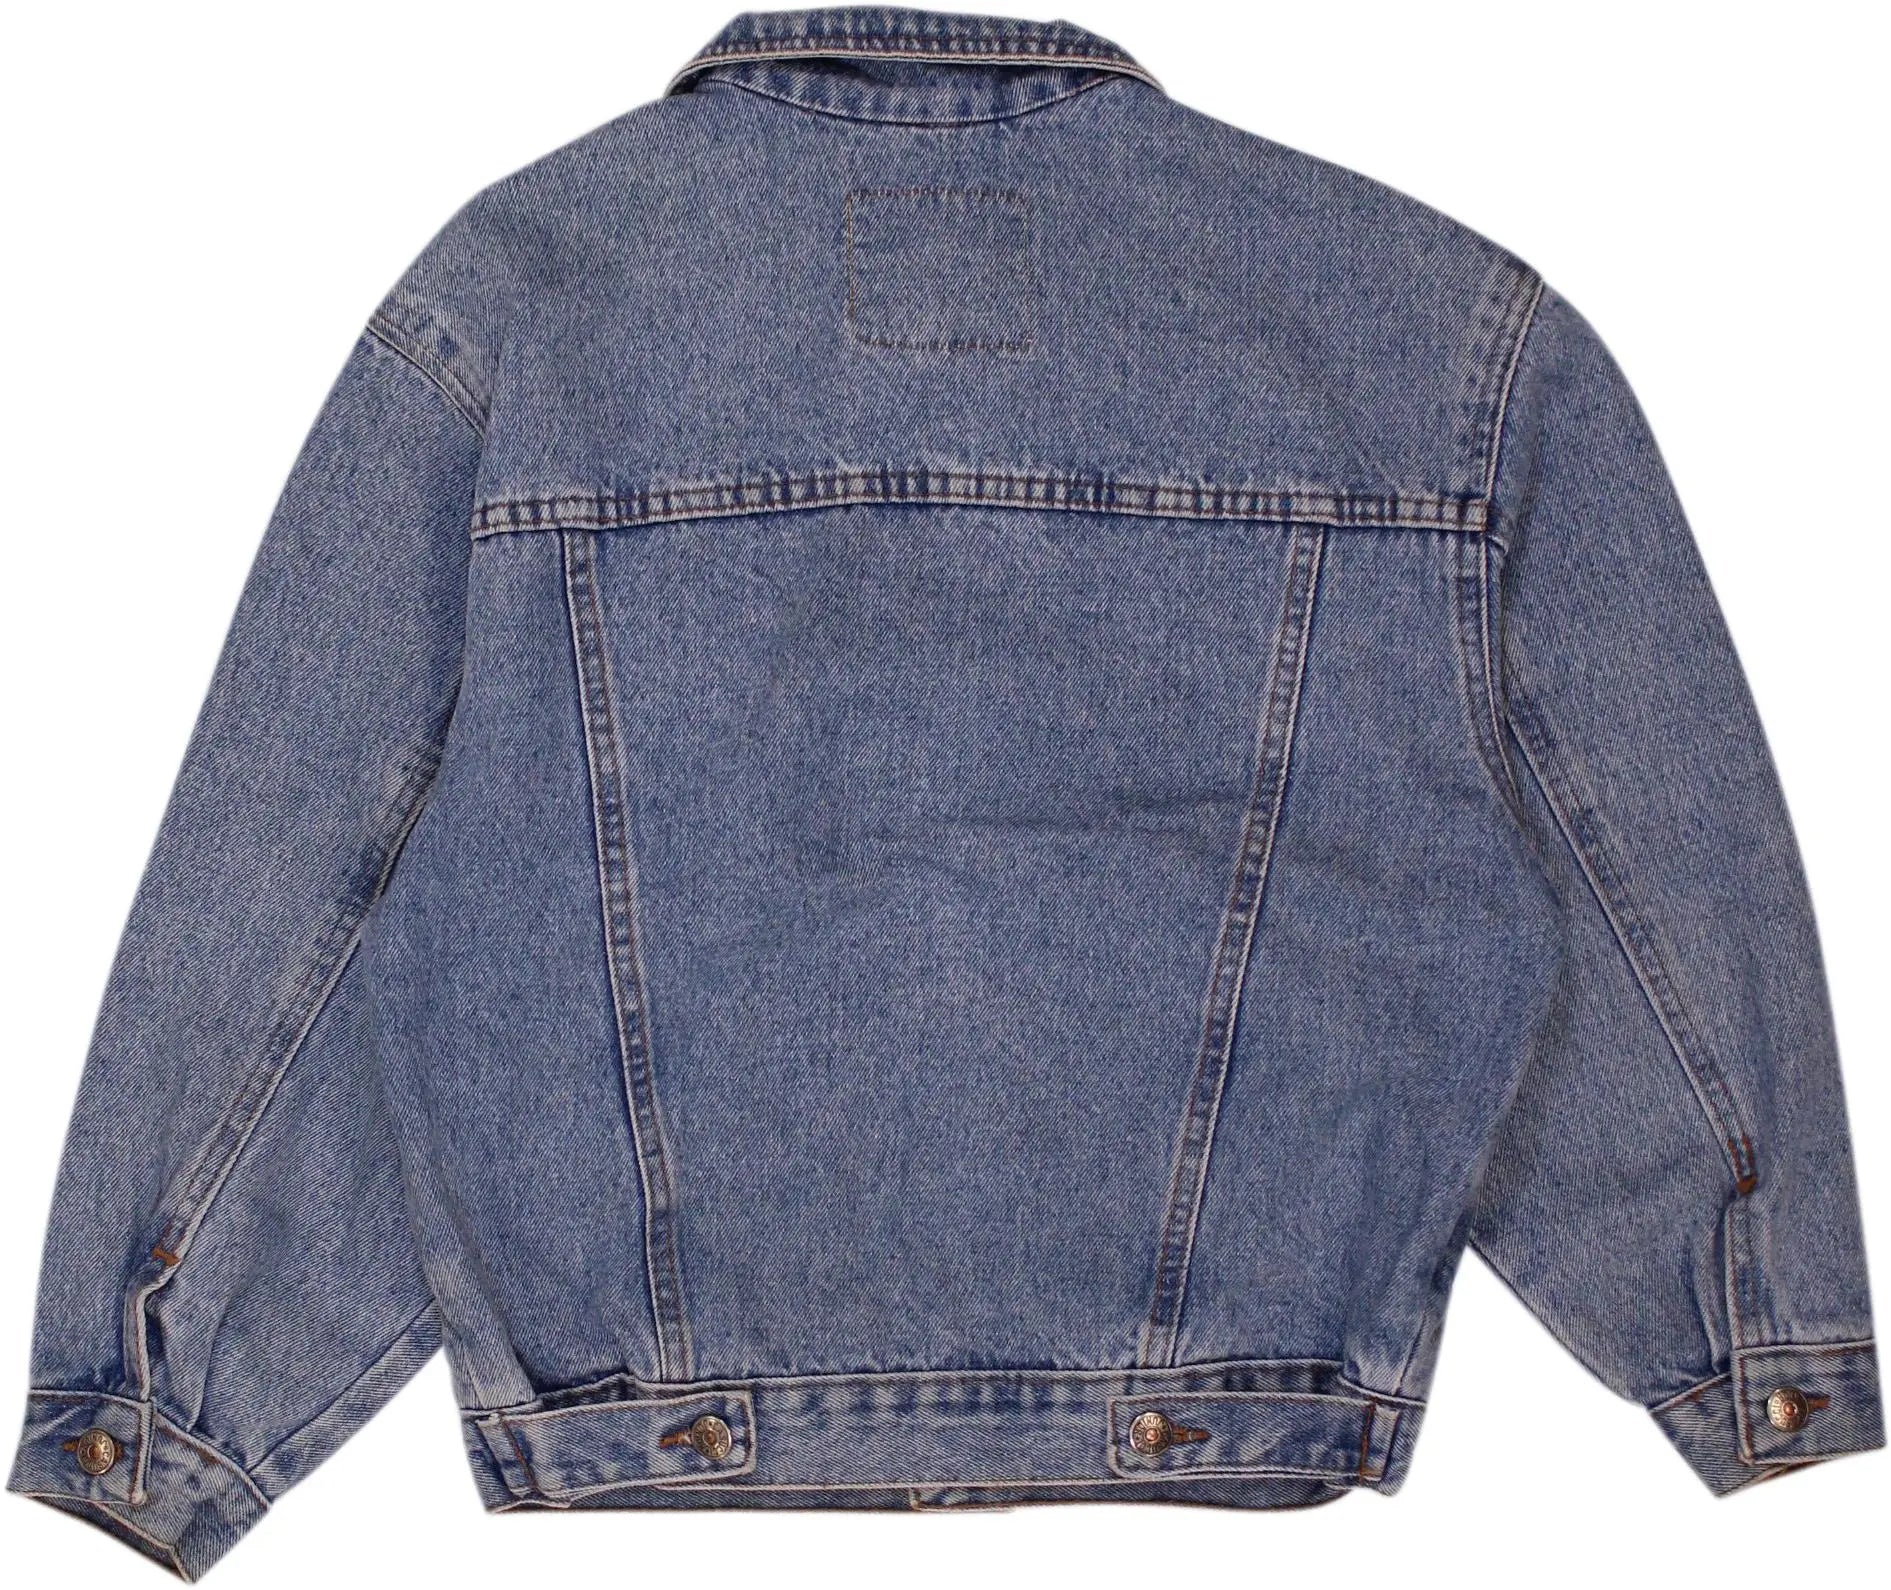 Casucci Junior - Blue Denim Jacket by Casucci- ThriftTale.com - Vintage and second handclothing